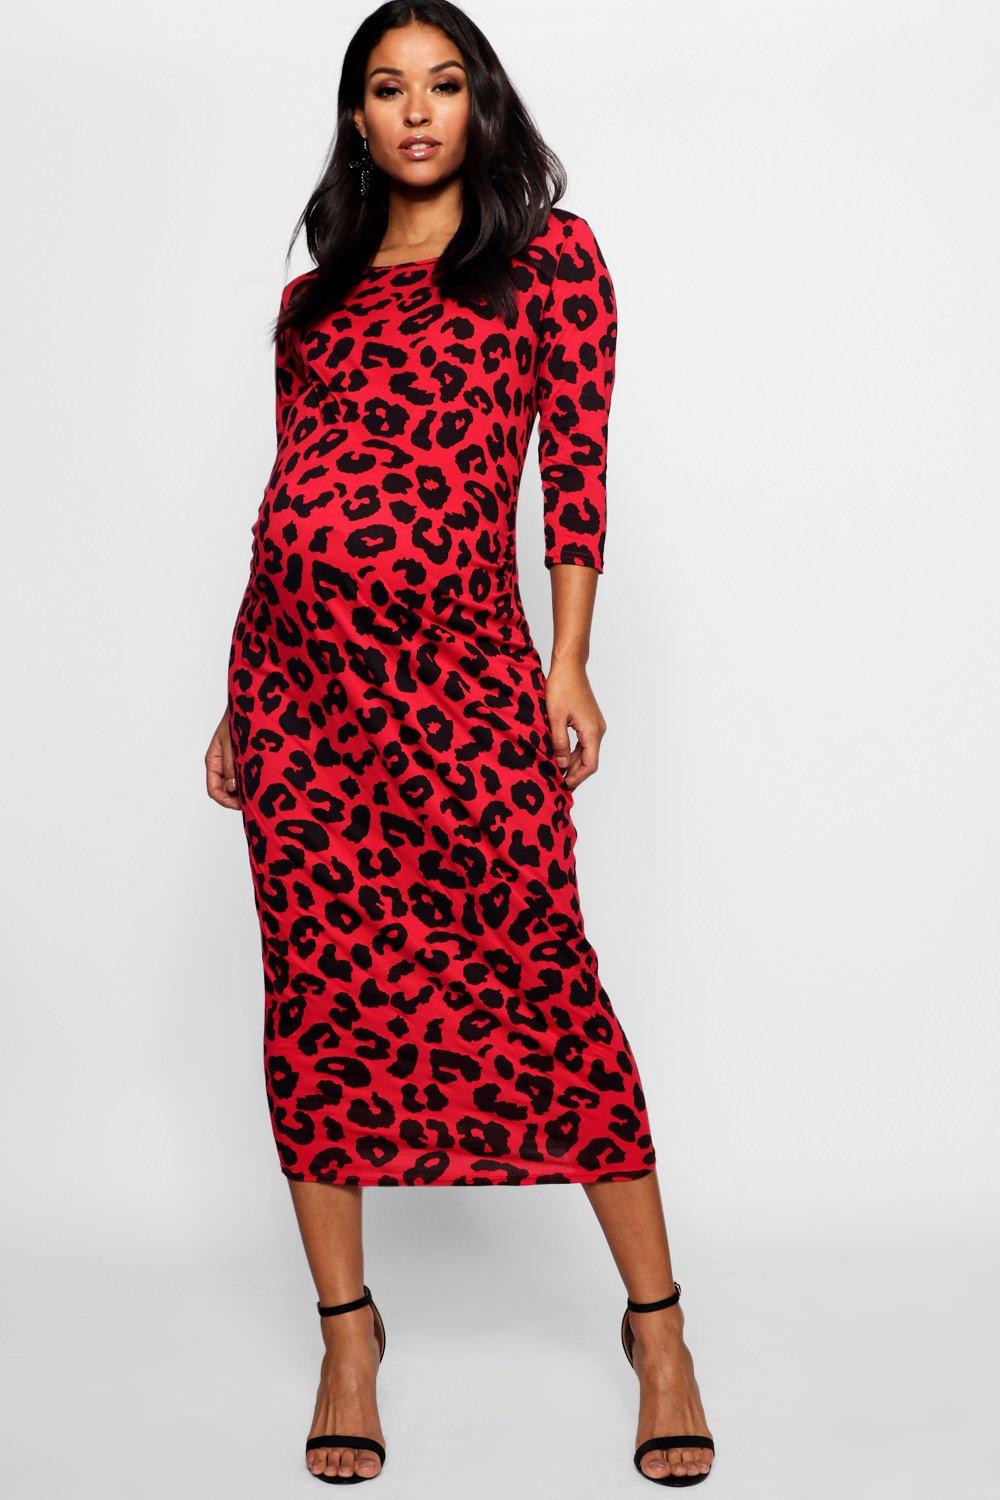 leopard print maternity clothes